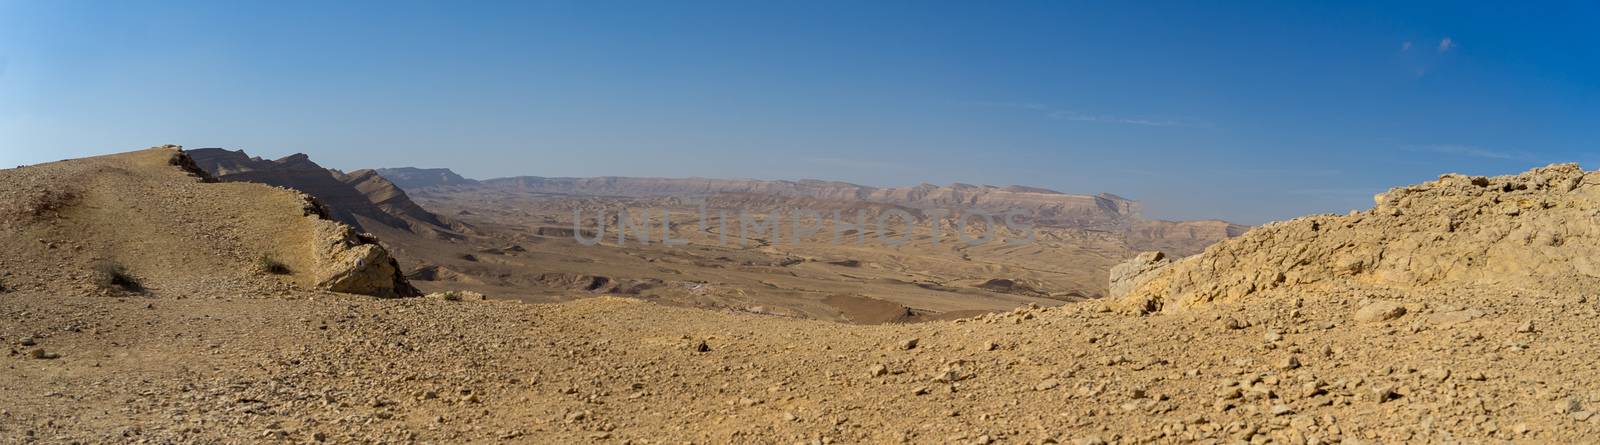 desert landscapes in Israel travel adventure by javax